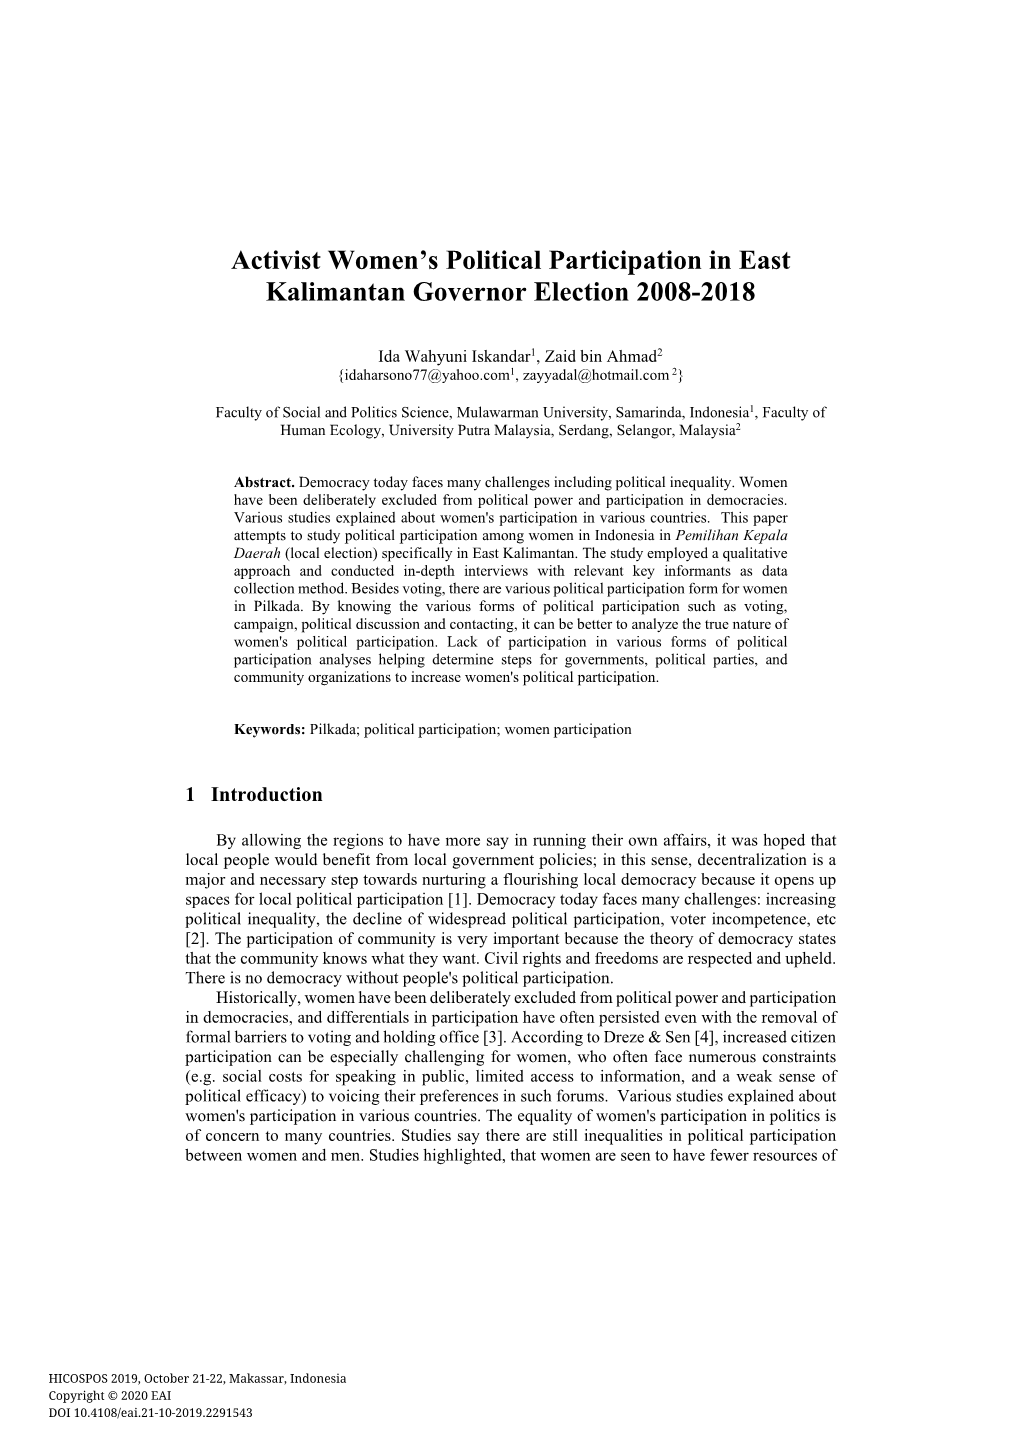 Activist Women's Political Participation in East Kalimantan Governor Election 2008-2018